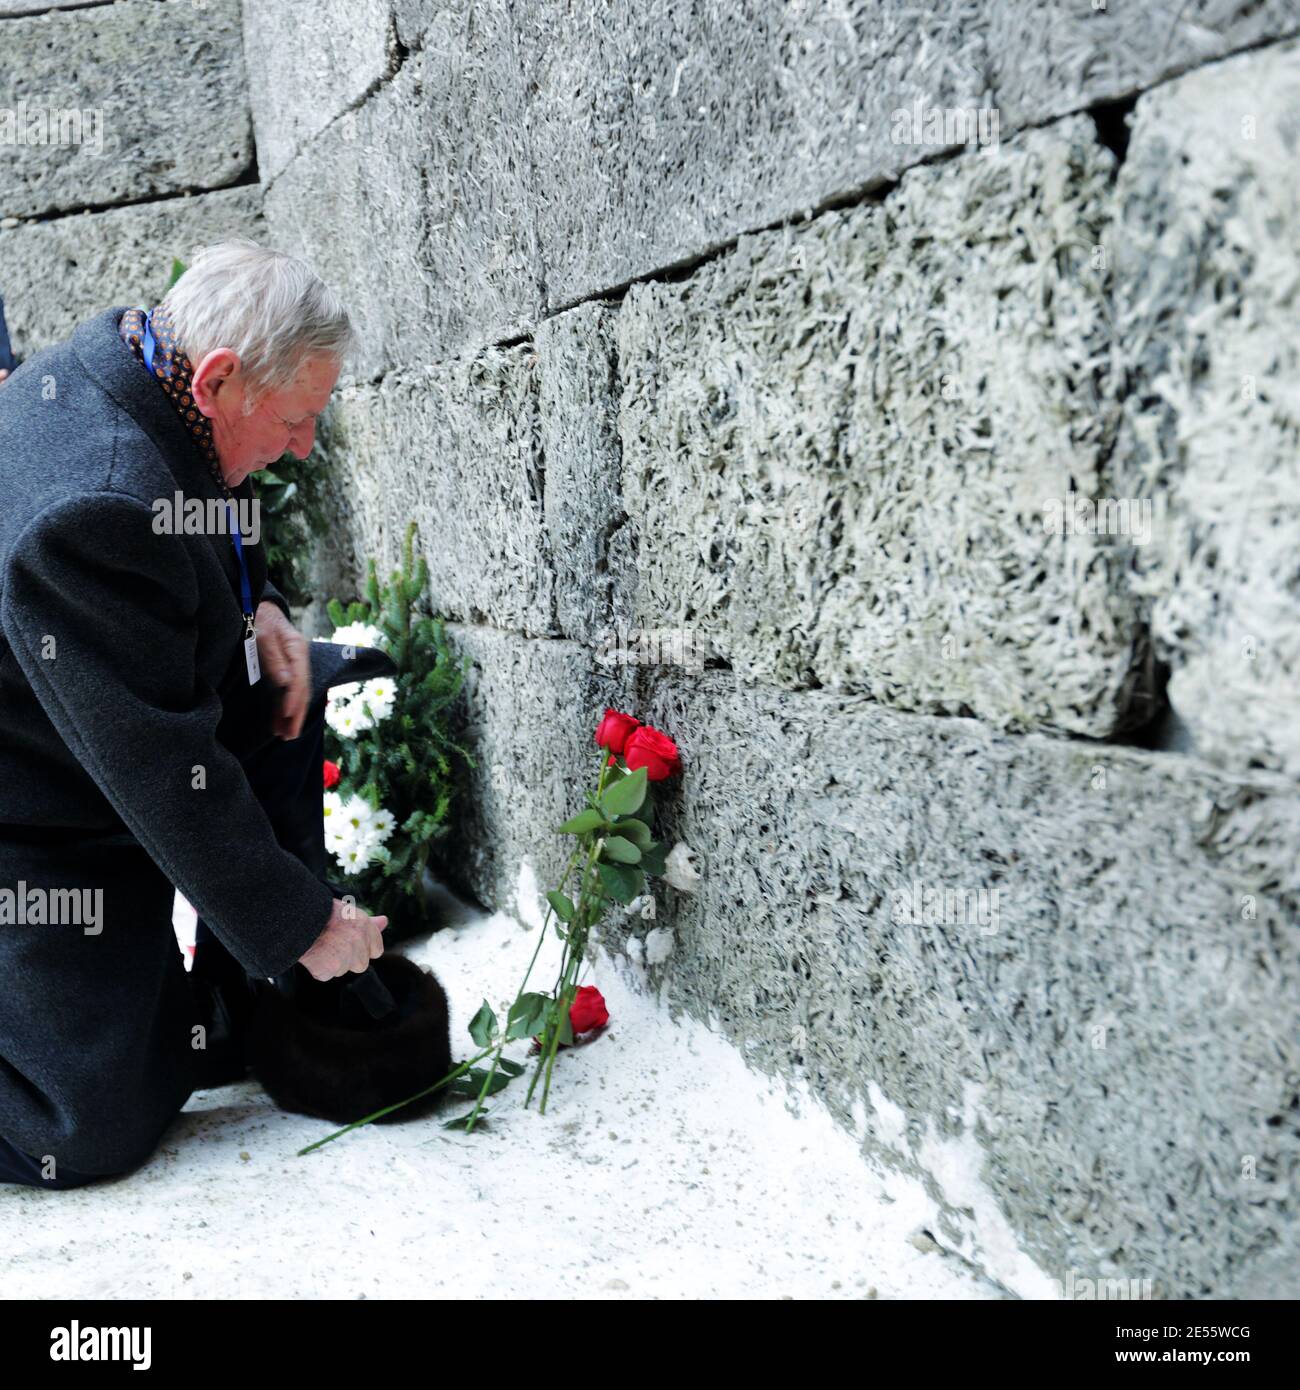 Oswiecim, Poland - January 27, 2017: 73 Th Anniversary of the Liberation of Auschwitz-Birkenau. The survivor visits the Auschwitz extermination site.T Stock Photo